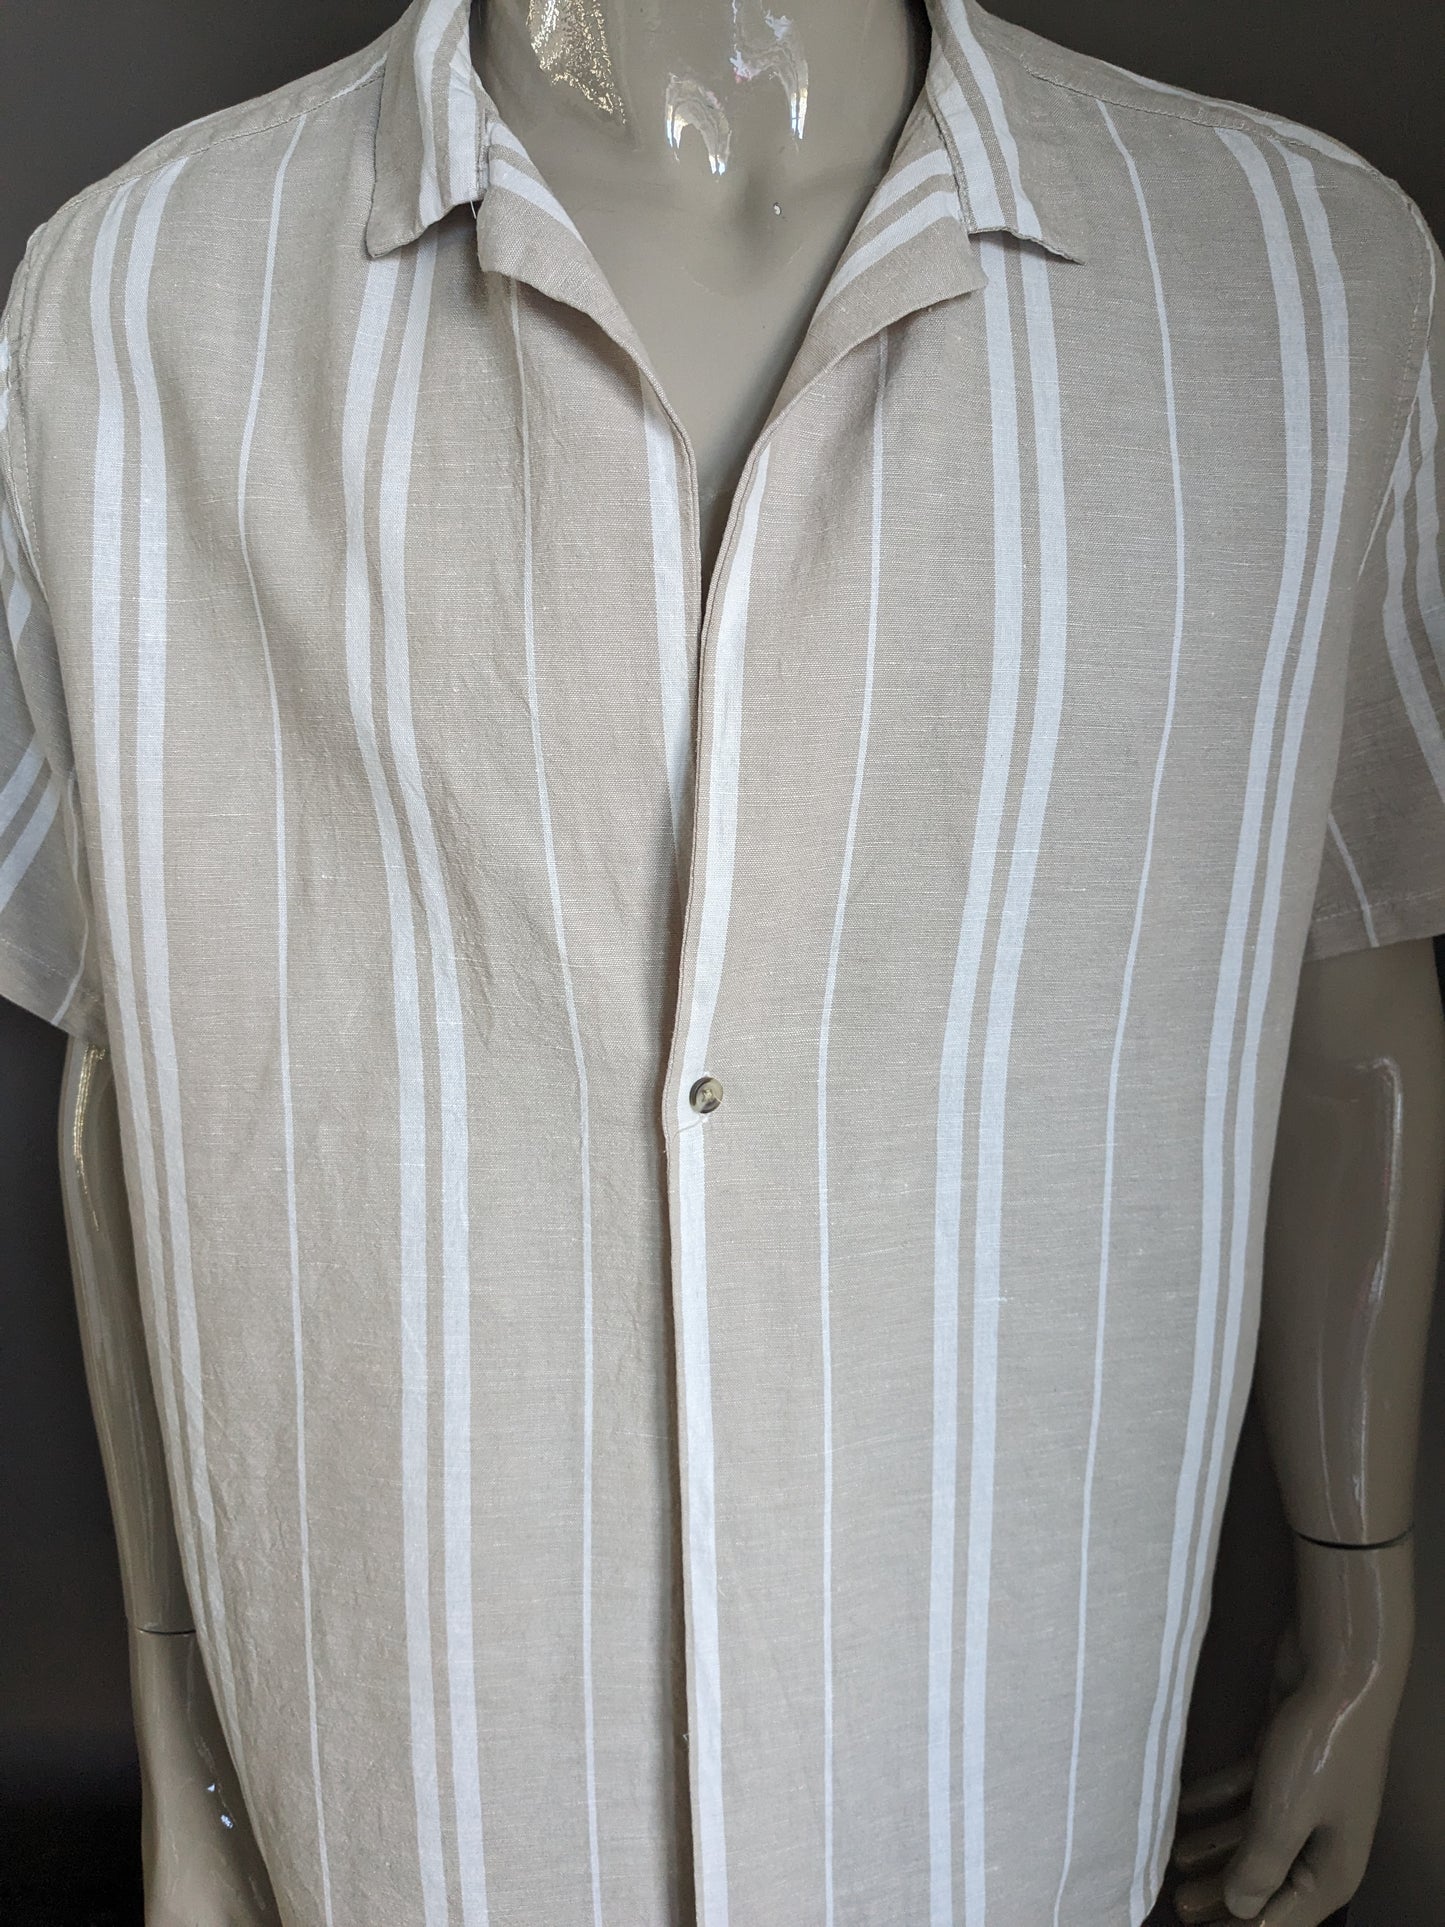 ASOS Design Linen Shirt Sleeve courte avec 1 nœud. Blanc beige rayé. Taille 2xl / xxl. 53% de lin.